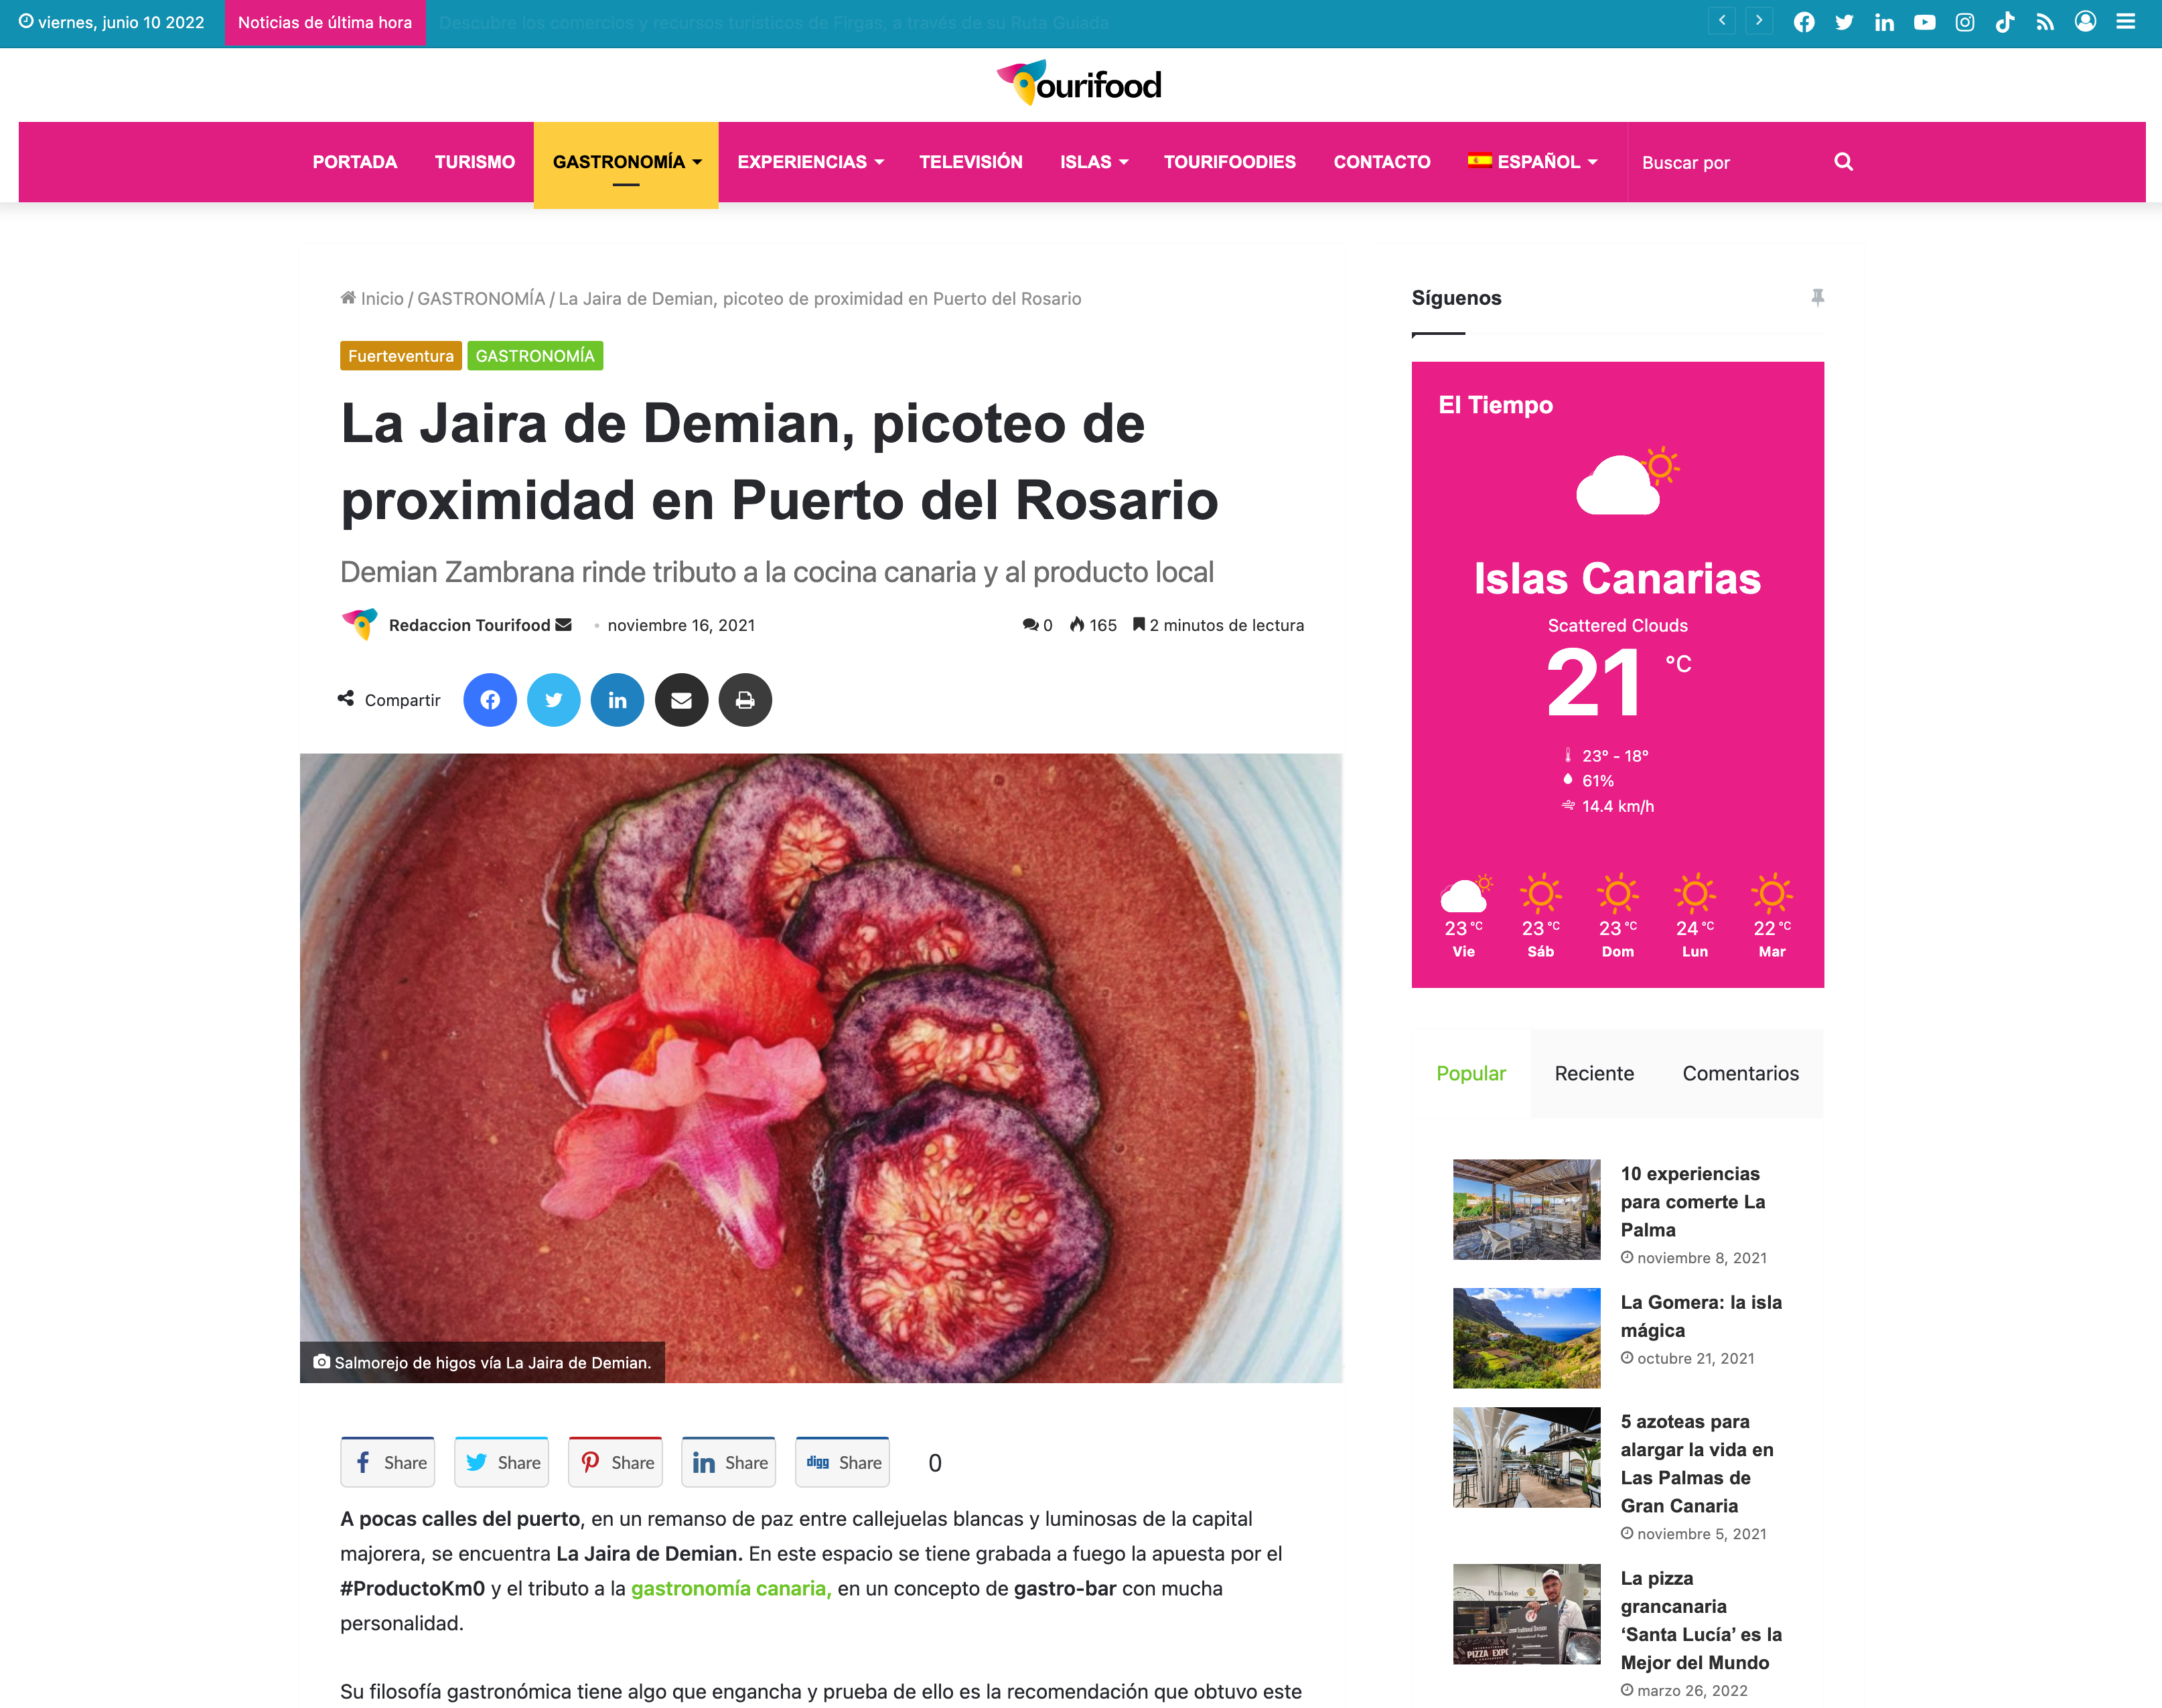 TouriFood: La Jaira de Demian, picoteo de proximidad en Puerto del Rosario